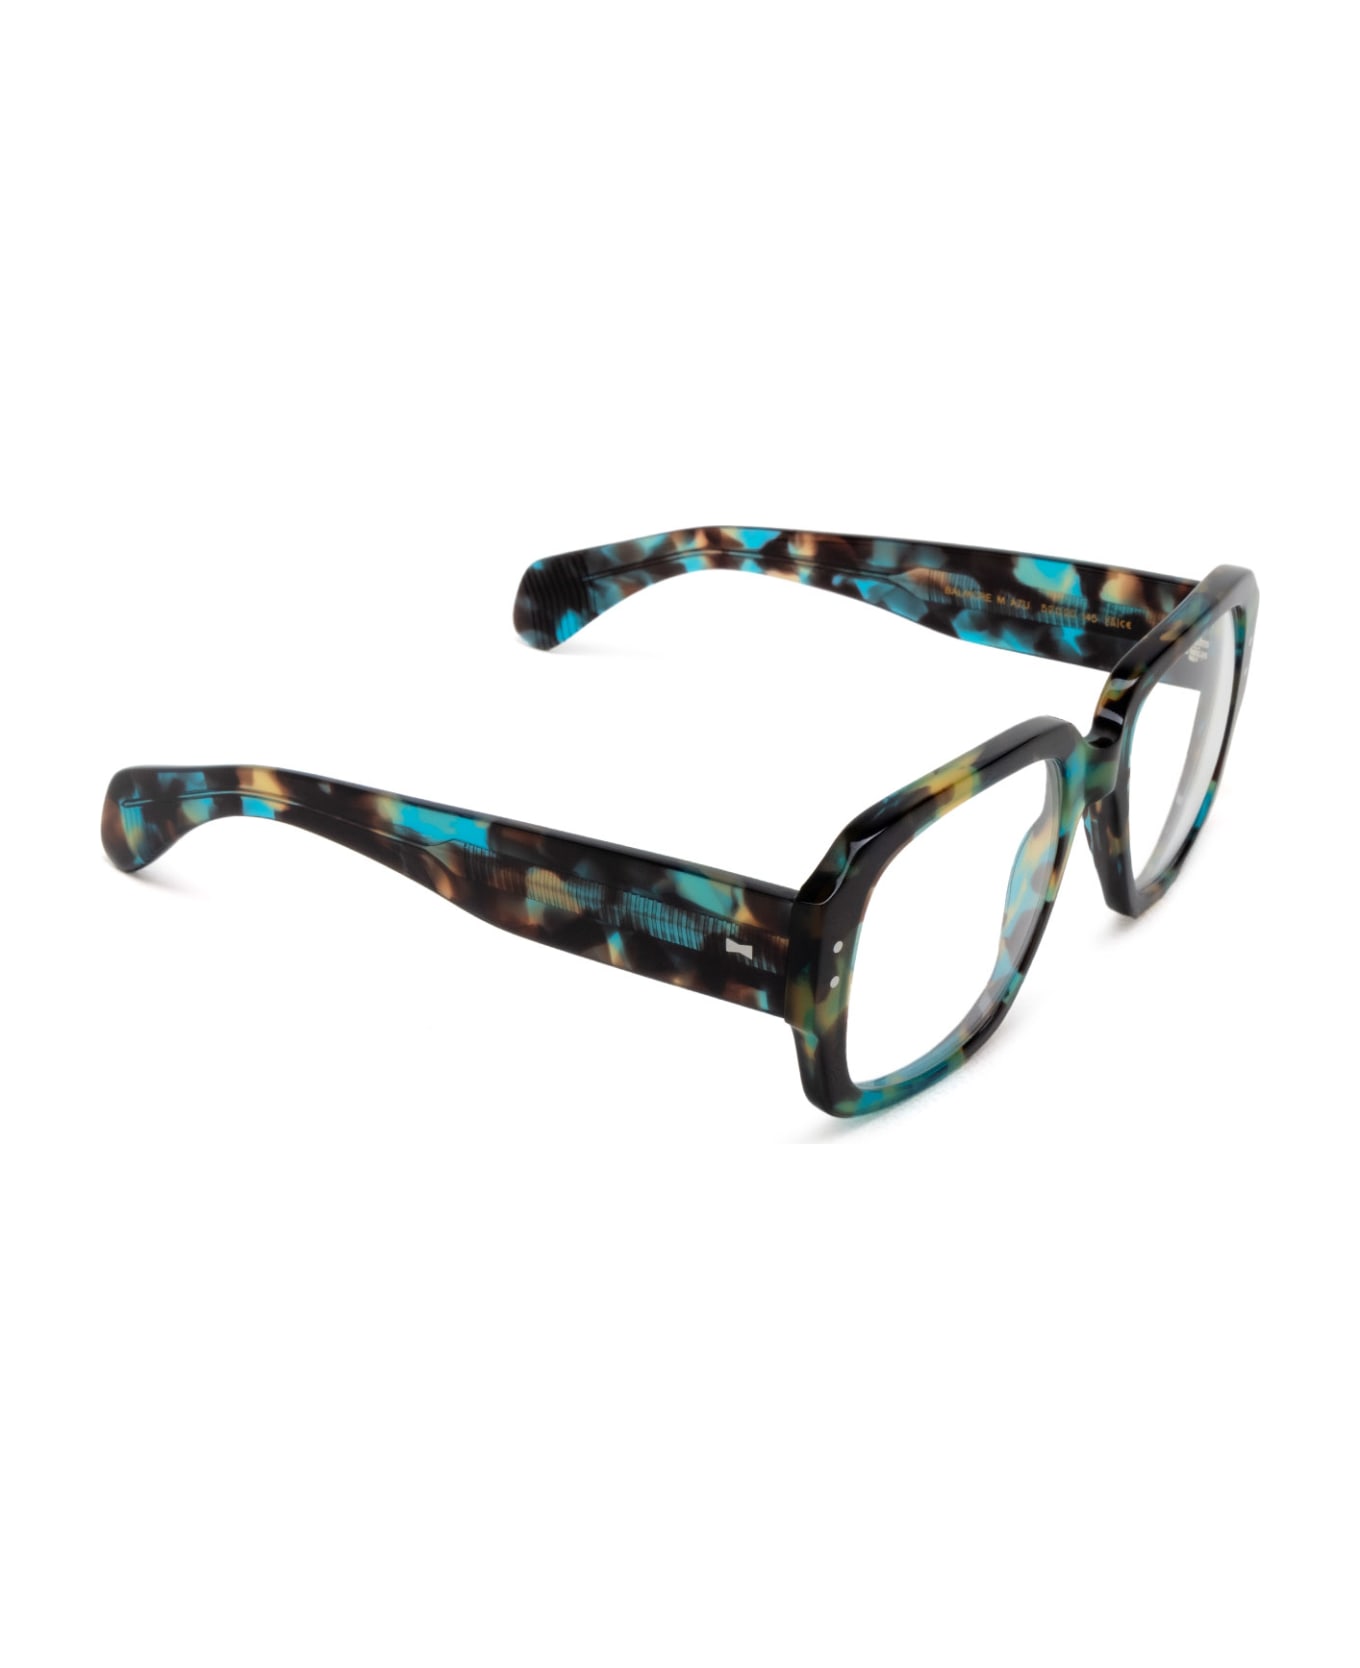 Cubitts Balmore Azure Turtle Glasses - Azure Turtle